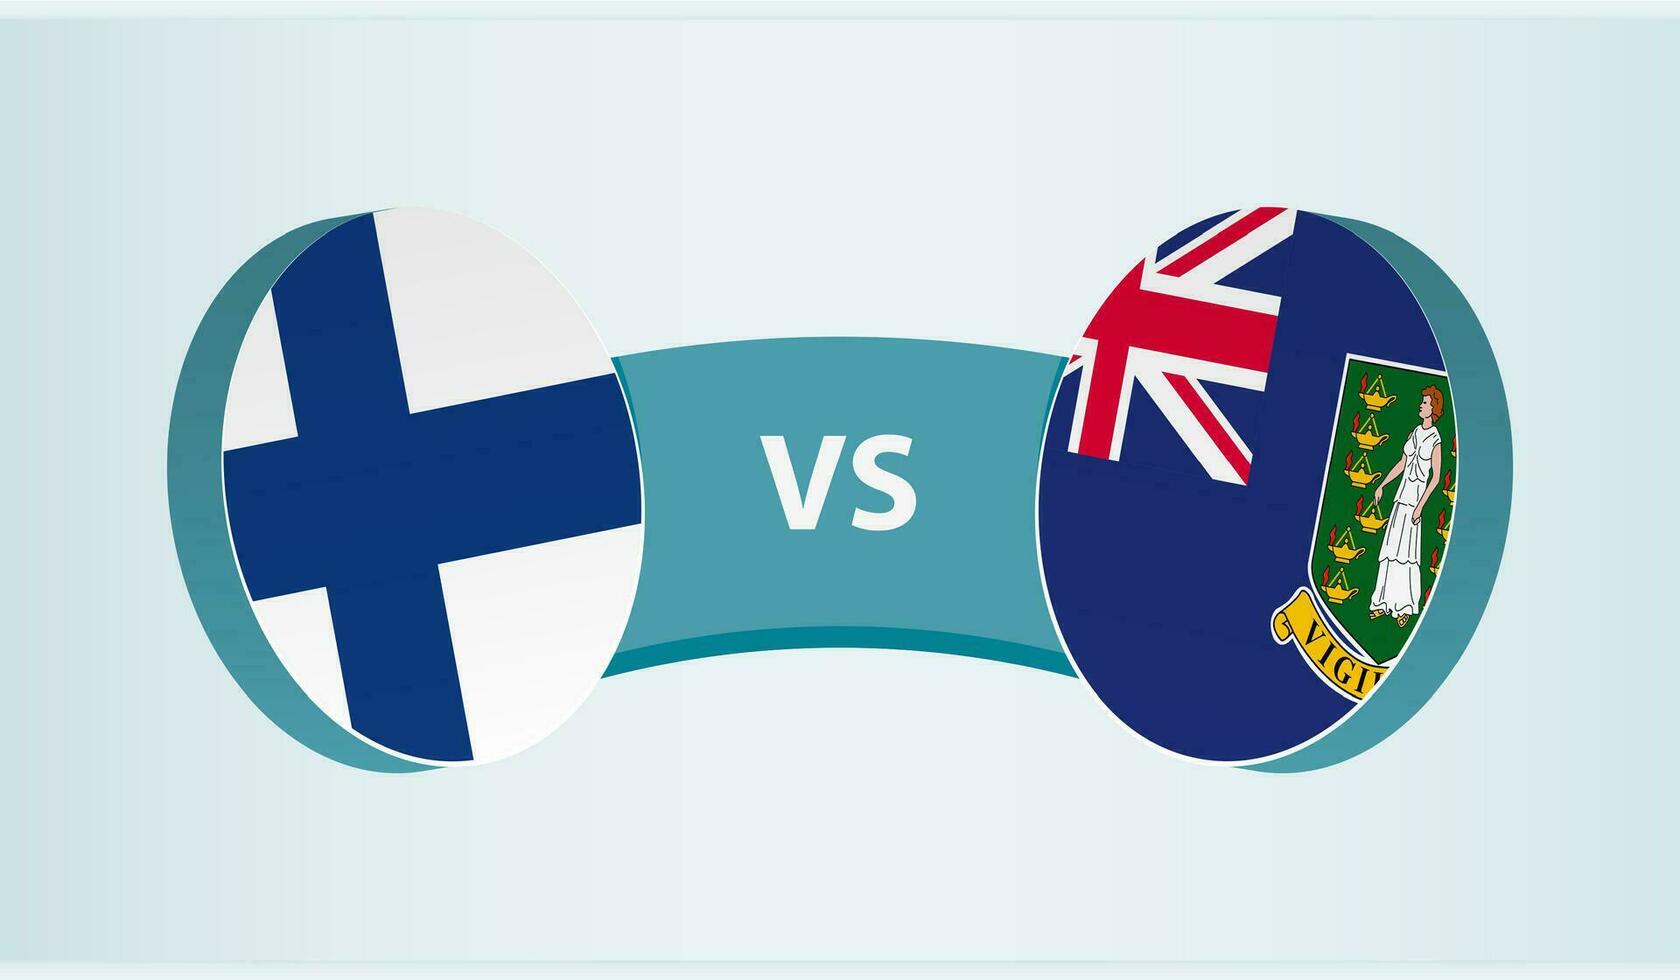 Finland versus British Virgin Islands, team sports competition concept. vector